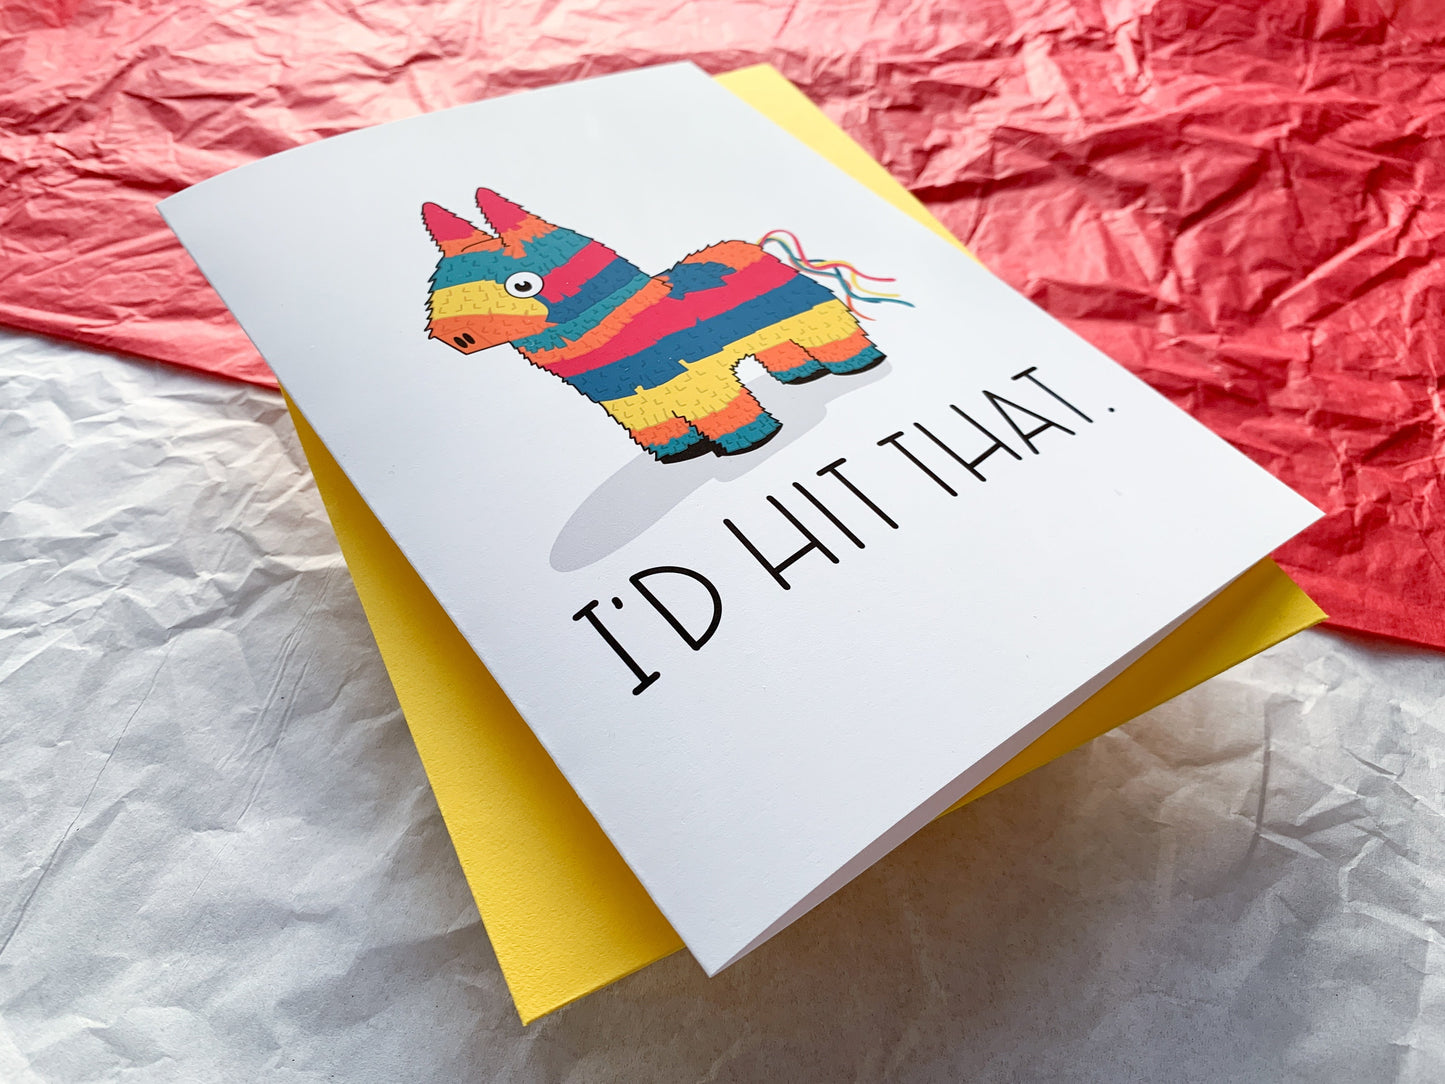 I'd Hit That Sexy Piñata Handmade Valentine Card by StoneDonut Design